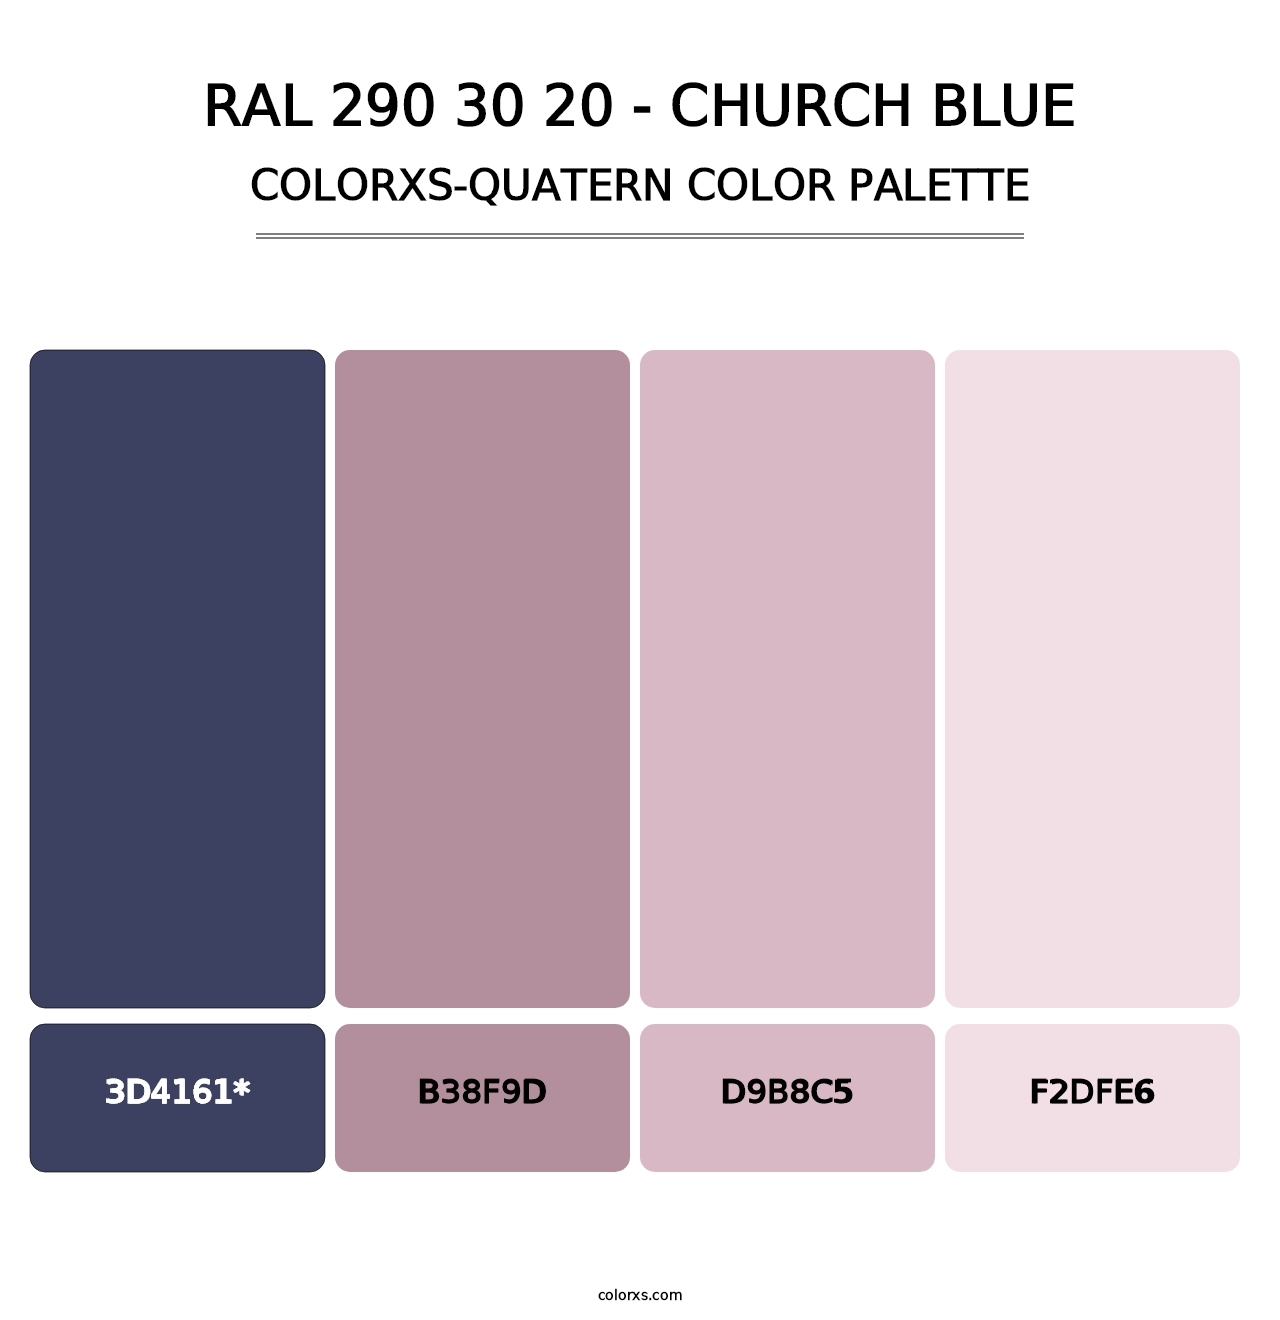 RAL 290 30 20 - Church Blue - Colorxs Quatern Palette